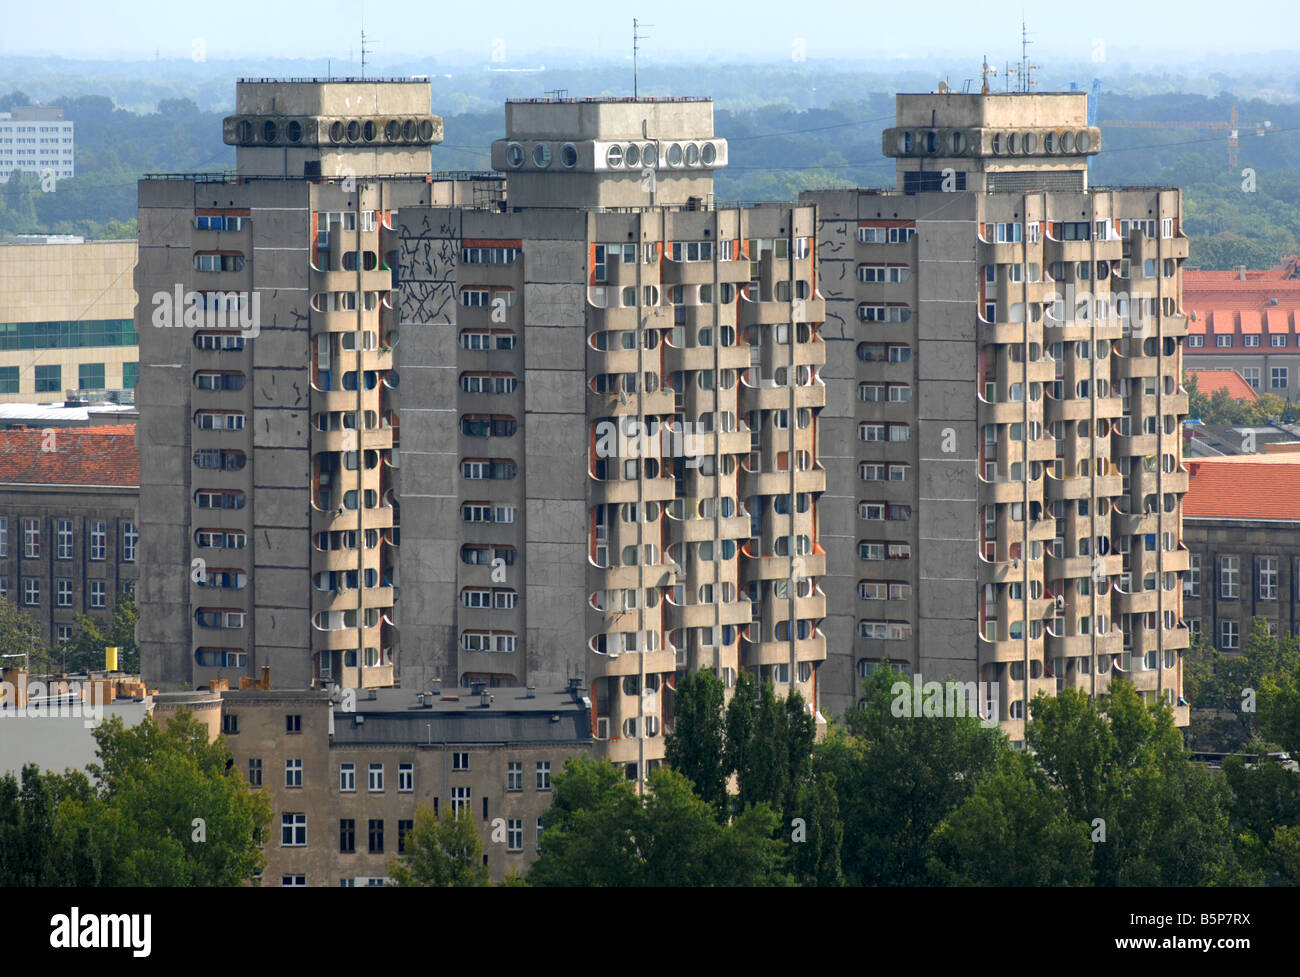 Flats, Blocks of flats, housing, apartments, Poland Stock Photo